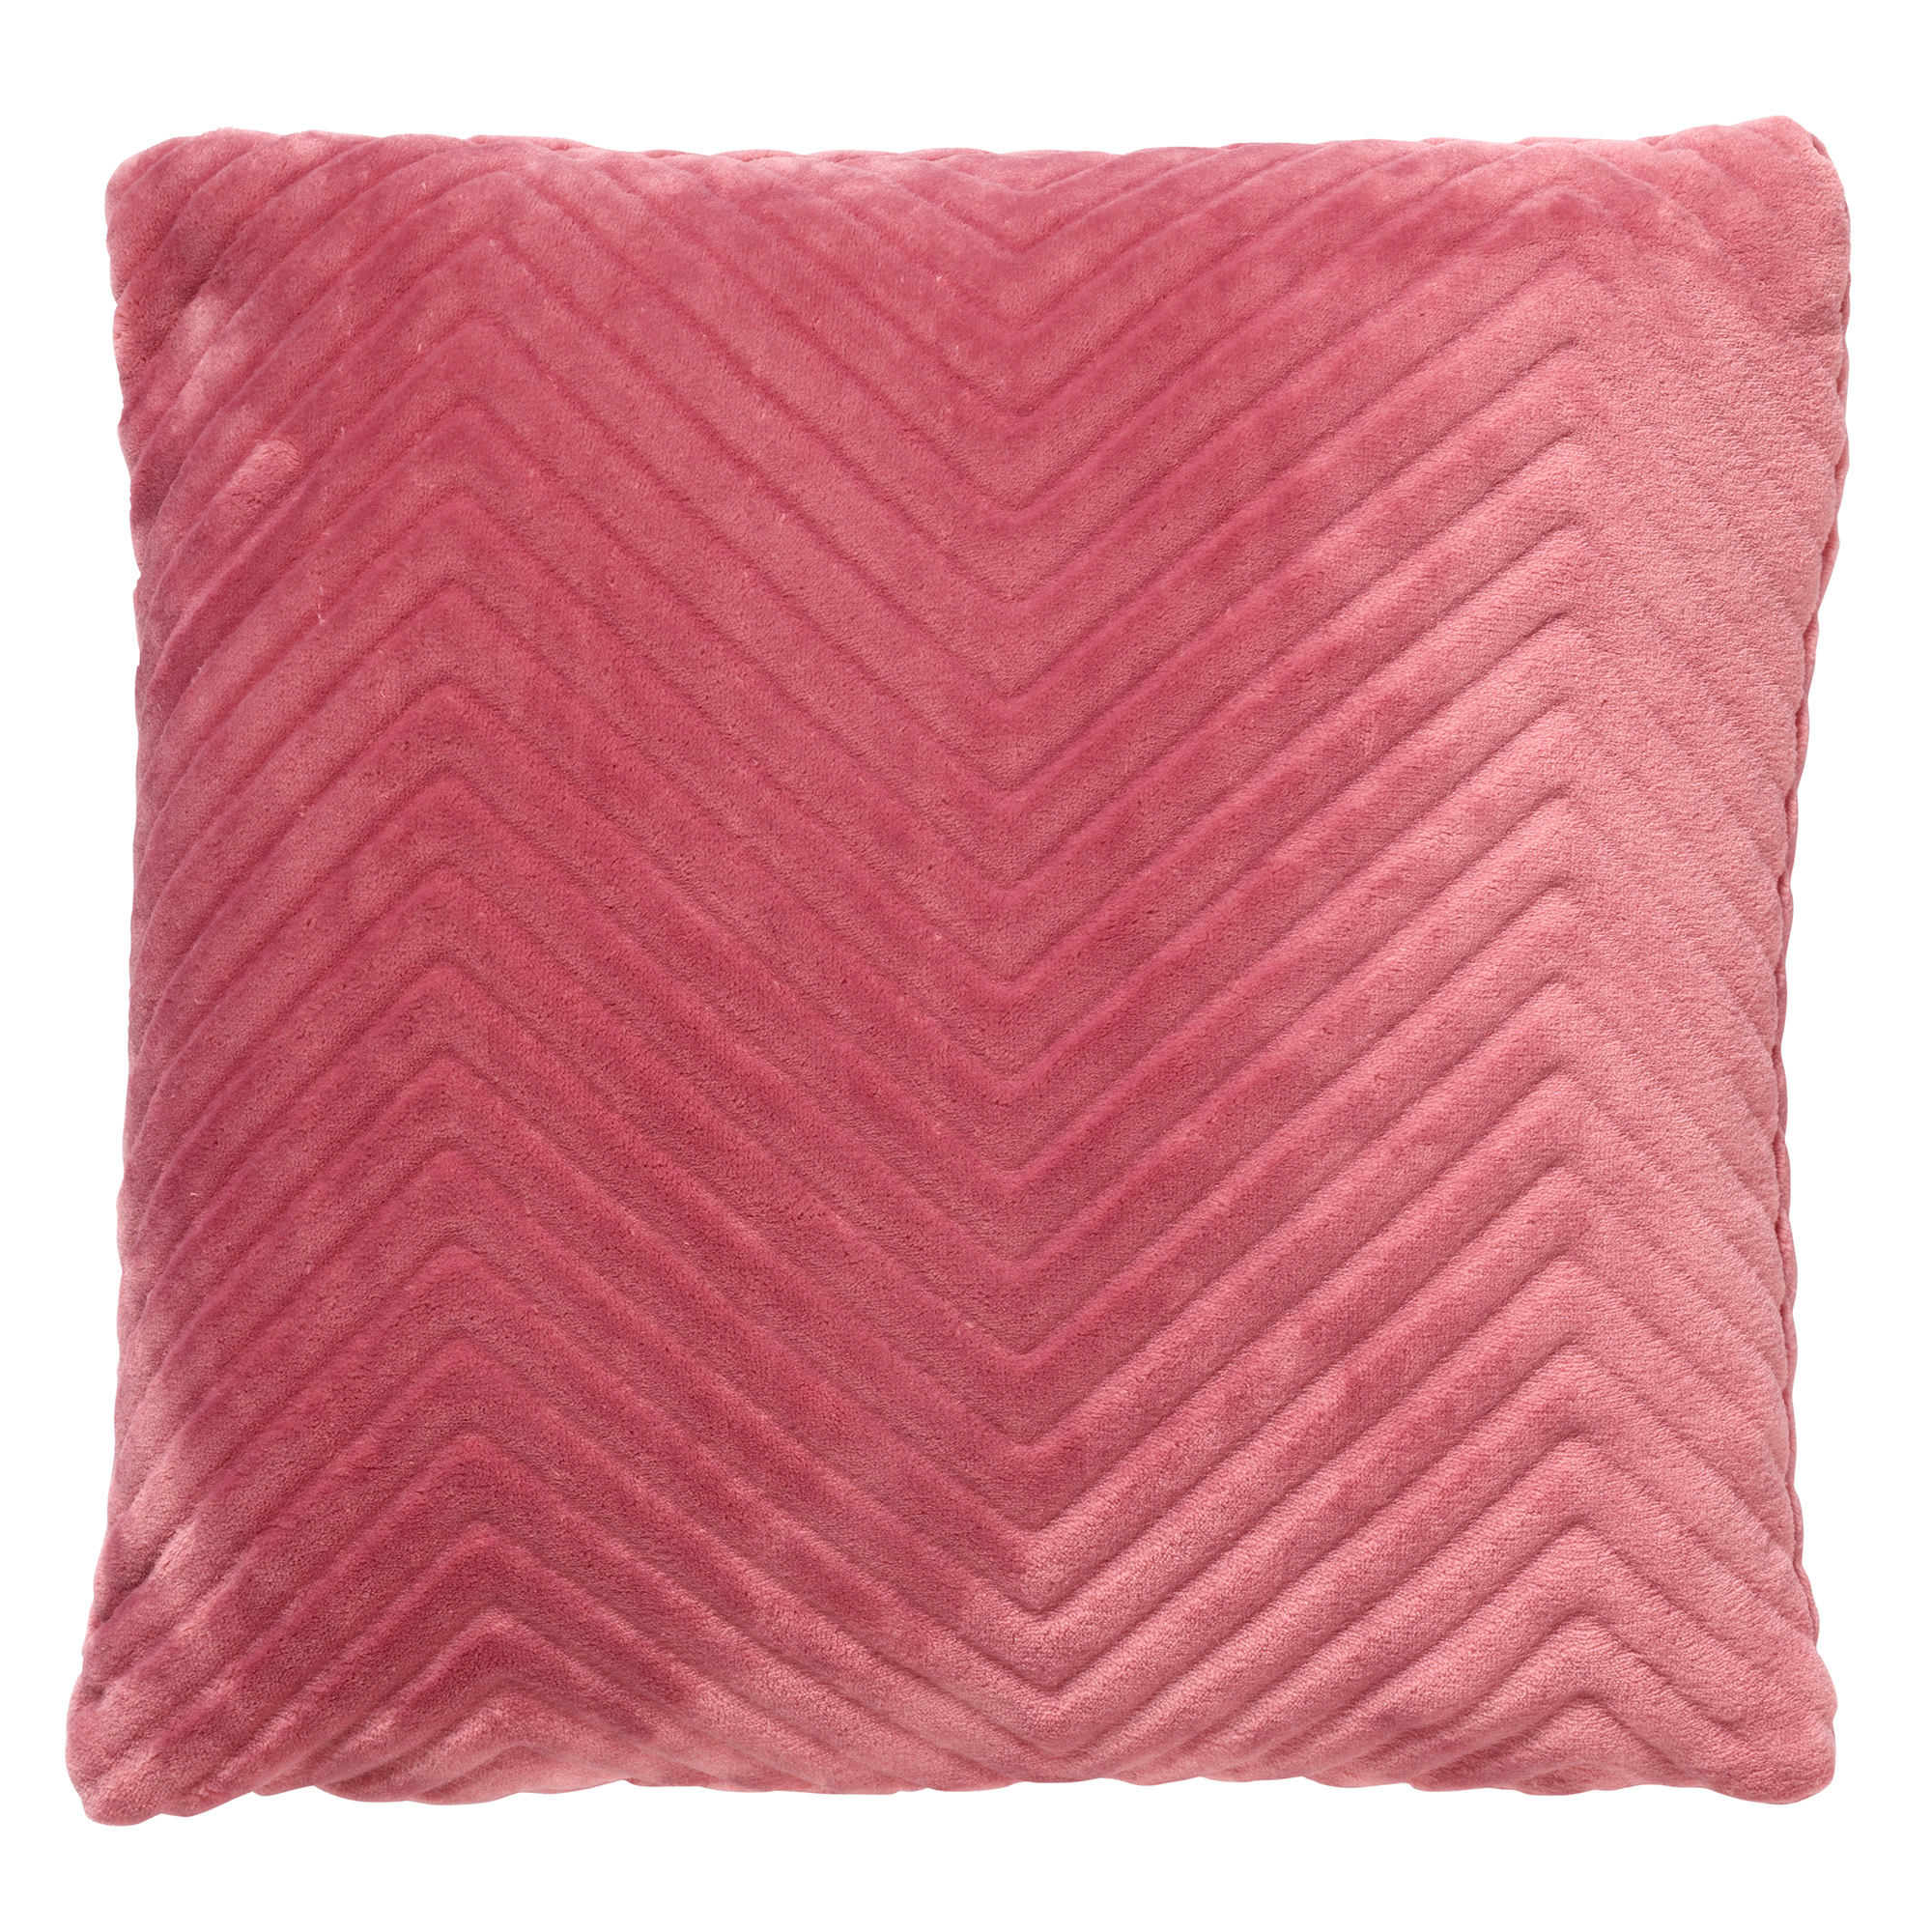 ZICO - Kussenhoes zigzag 45x45 cm Dusty Rose - roze - superzacht